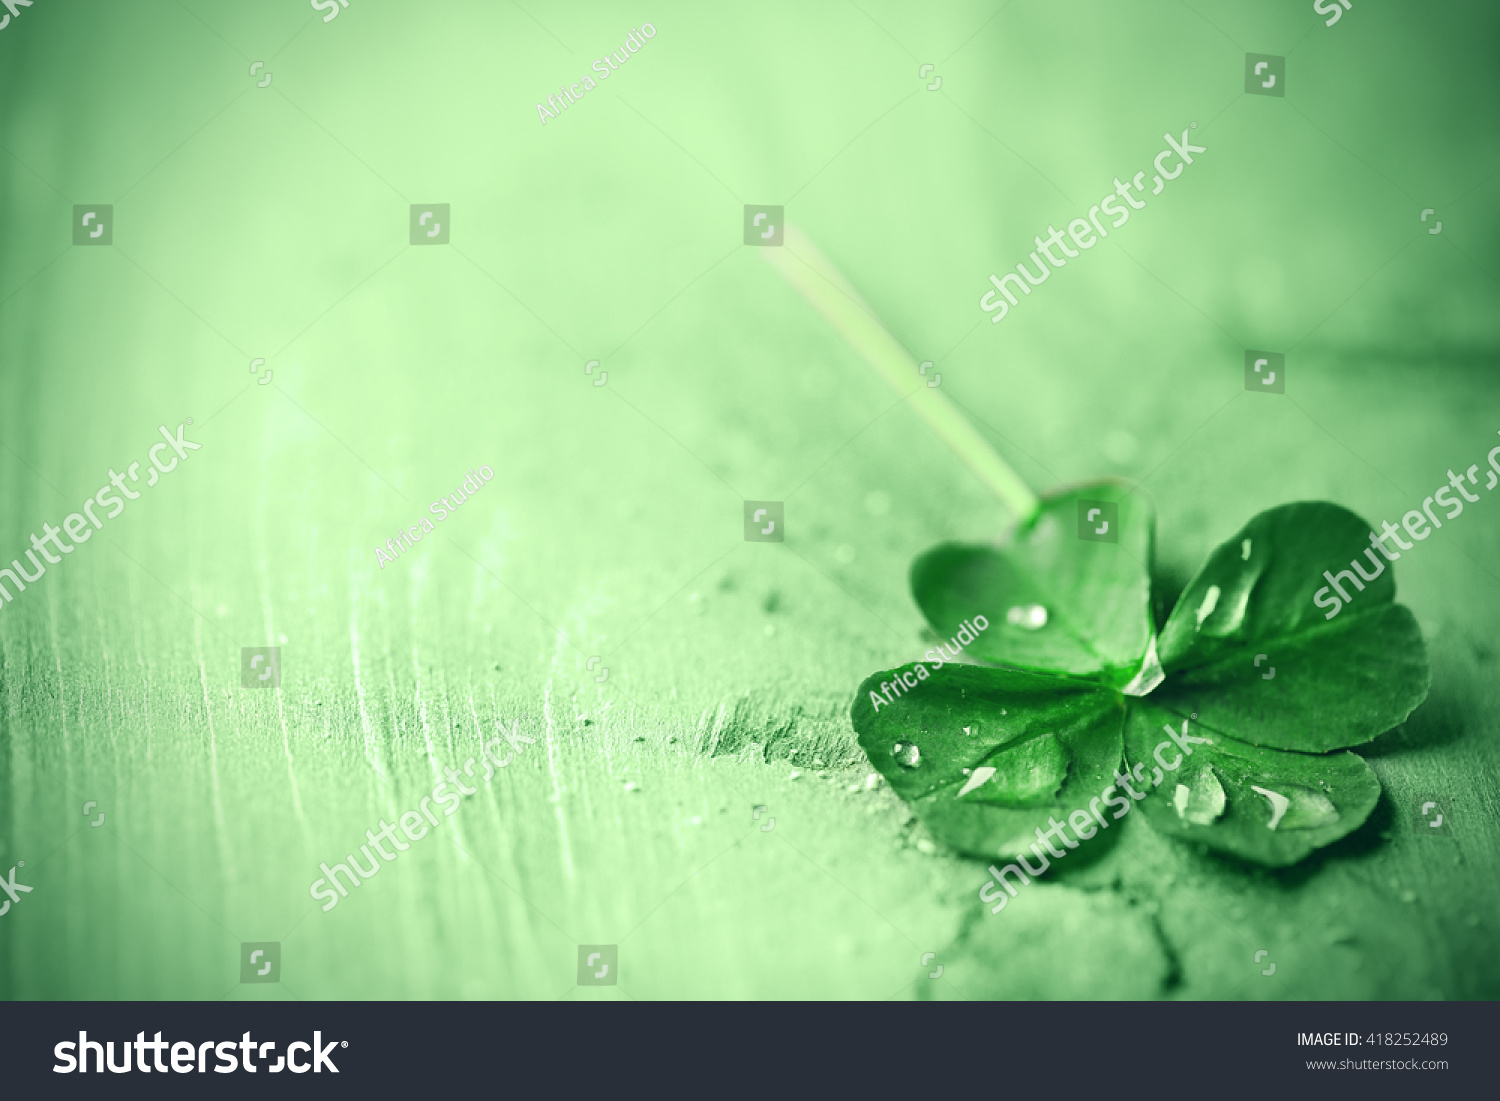 St. Patricks day,  clover leaf on green wooden background #418252489